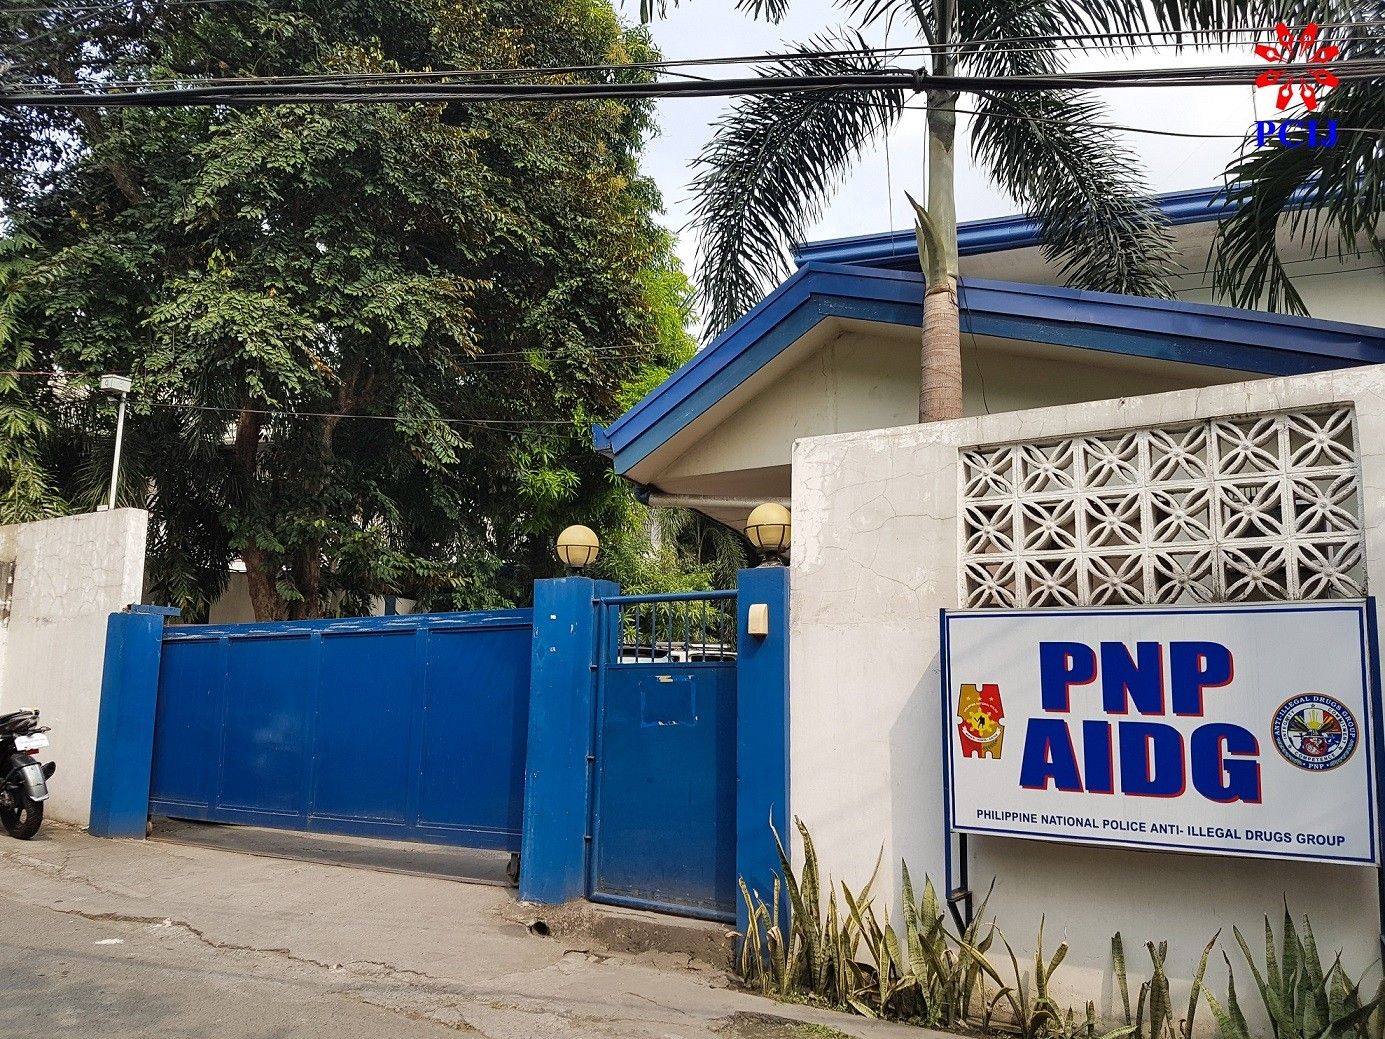 PNP-AIDG's picky protocols fail